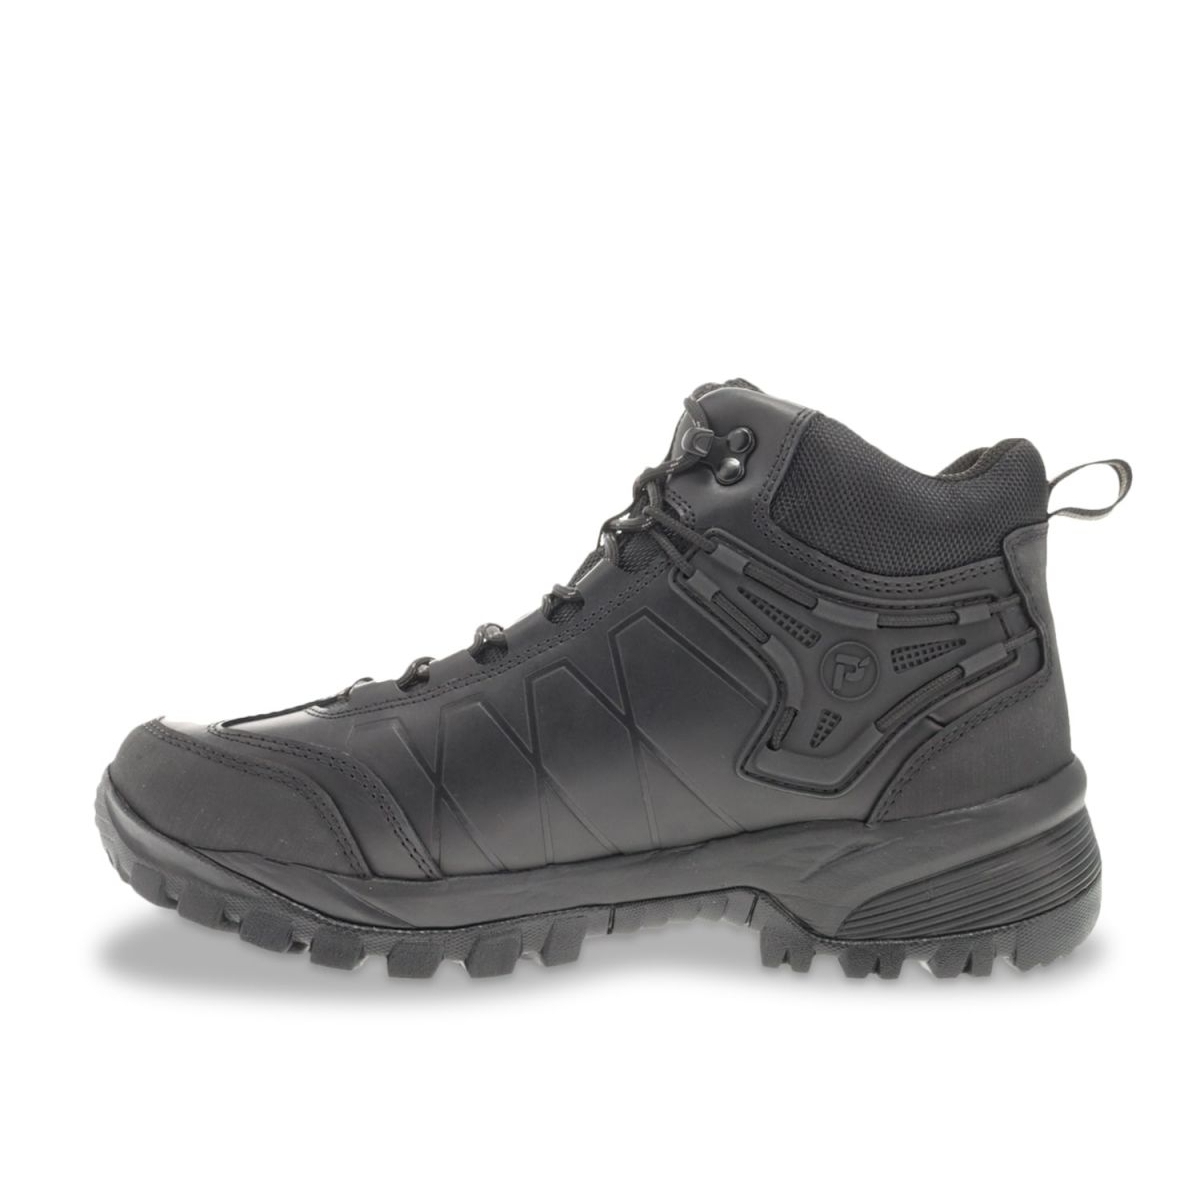 Propet Men's Ridge Walker Force Hiking Boots Black - MBA052LBLK BLACK - BLACK, 10.5 X-Wide